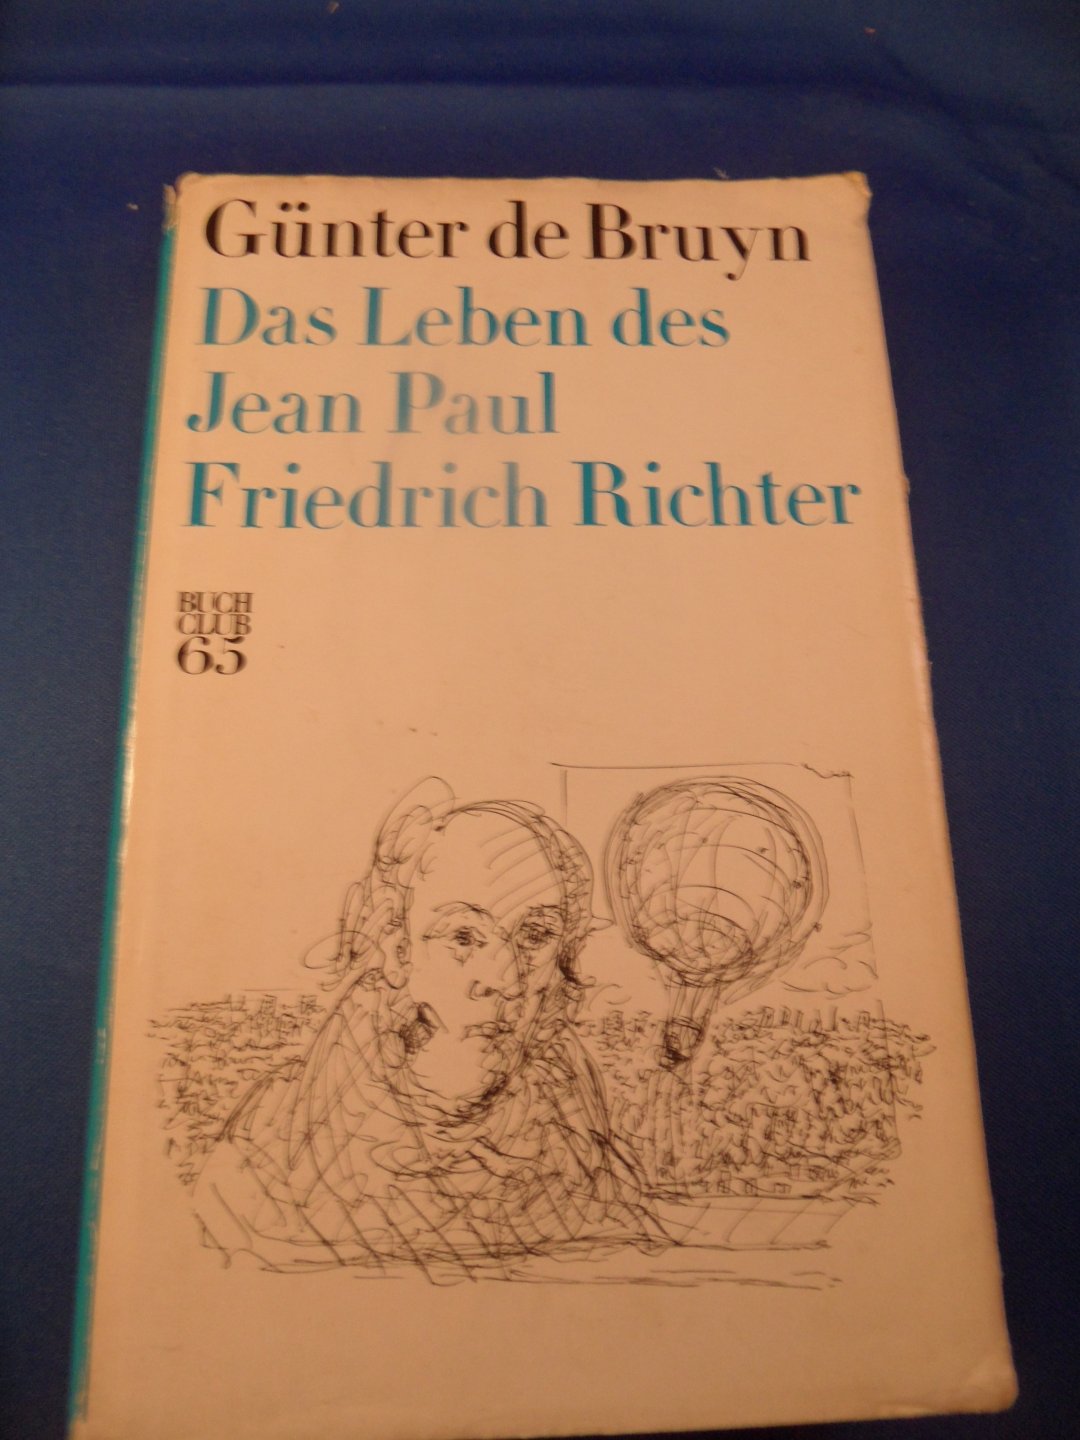 Bruyn, Günter de - Das Leben des Jean Paul Friedrich Richter